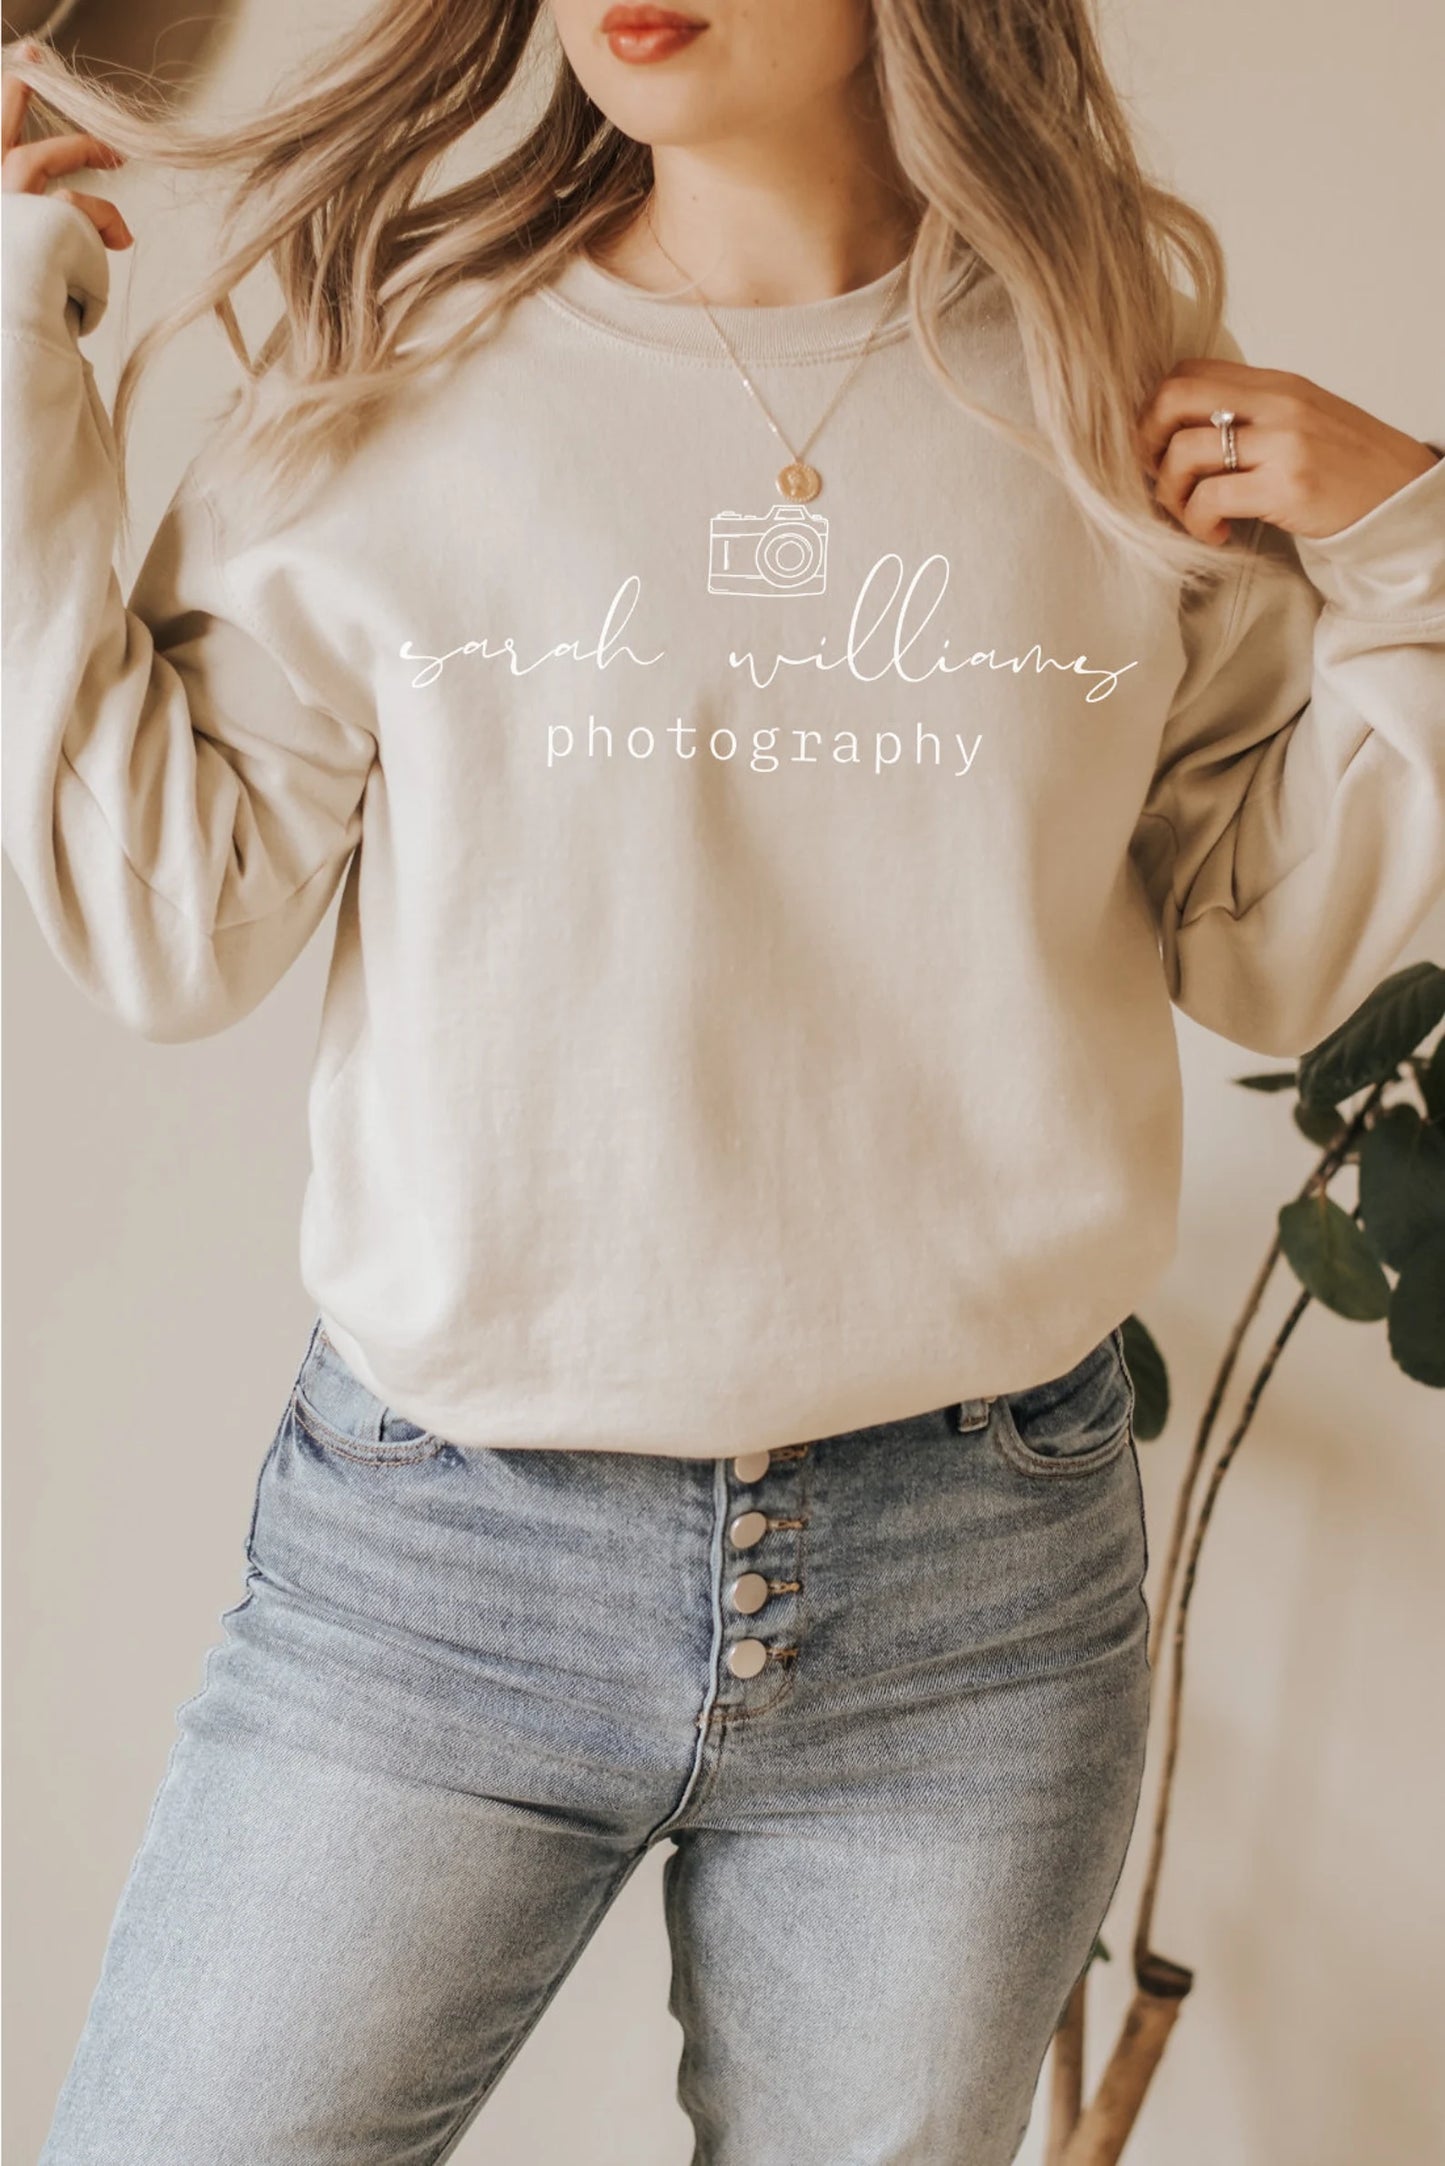 custom photographer sweatshirt with camera icon in tan